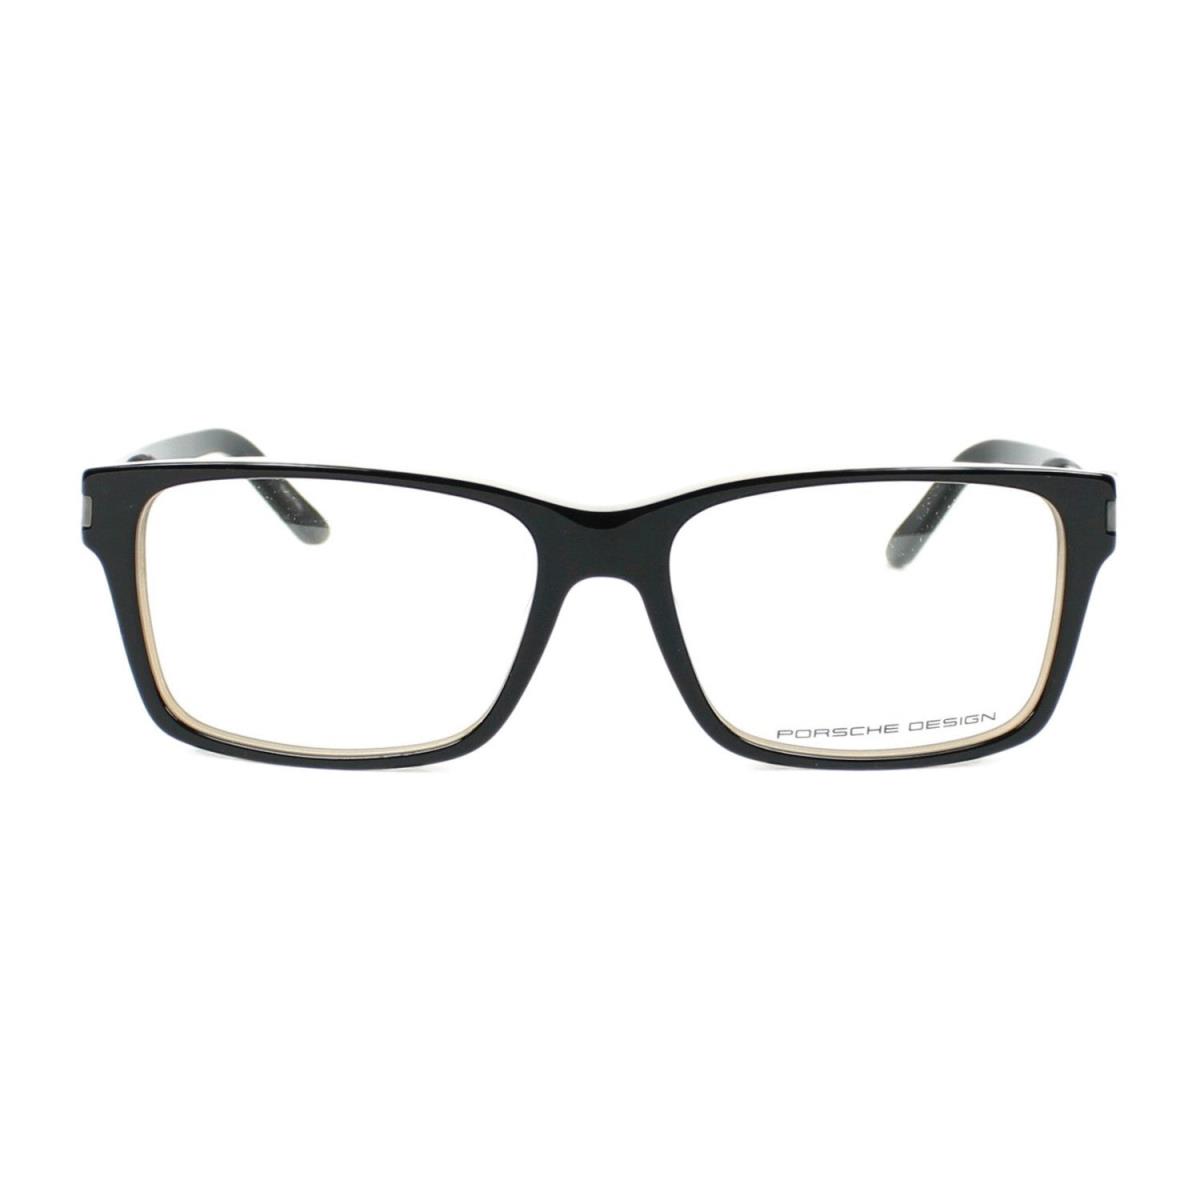 Porsche Design Frame - P`8249-A Black and Beige Rx Eyeglasses